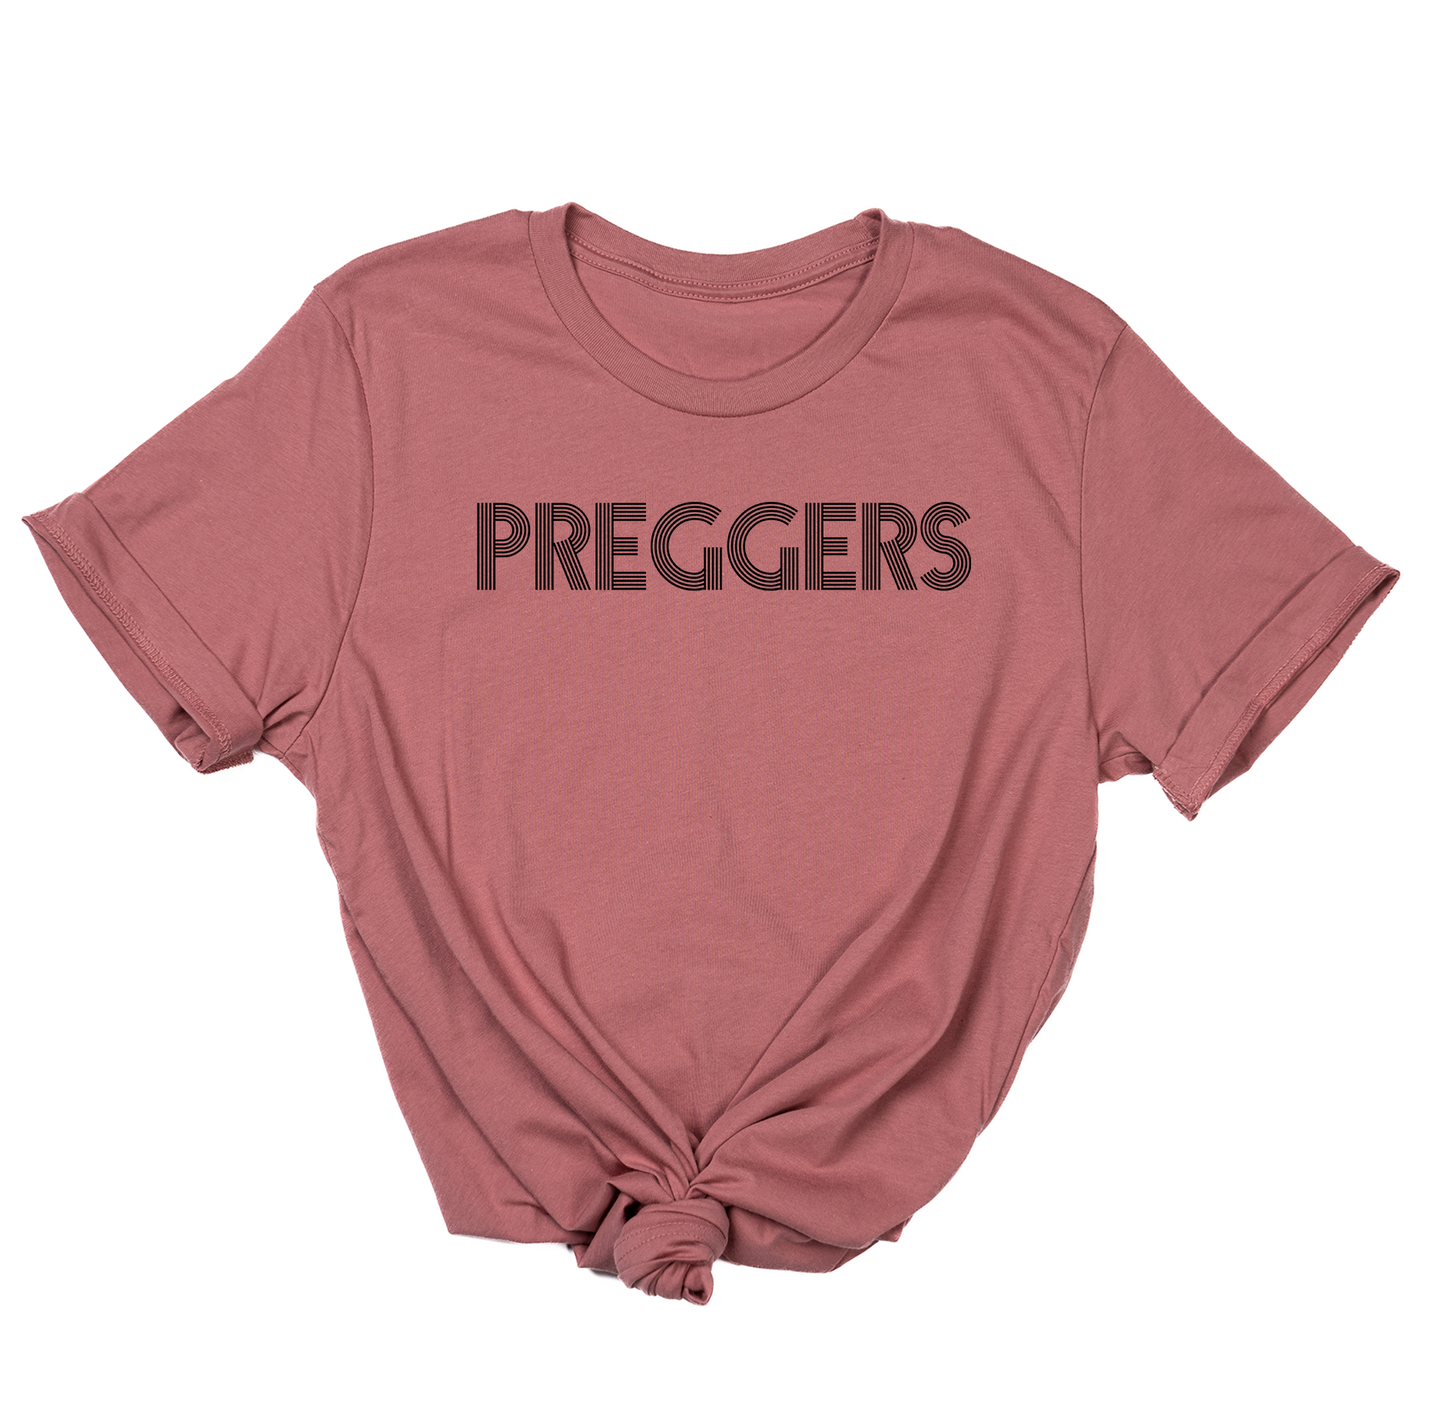 PREGGERS (Black) - Tee (Mauve)